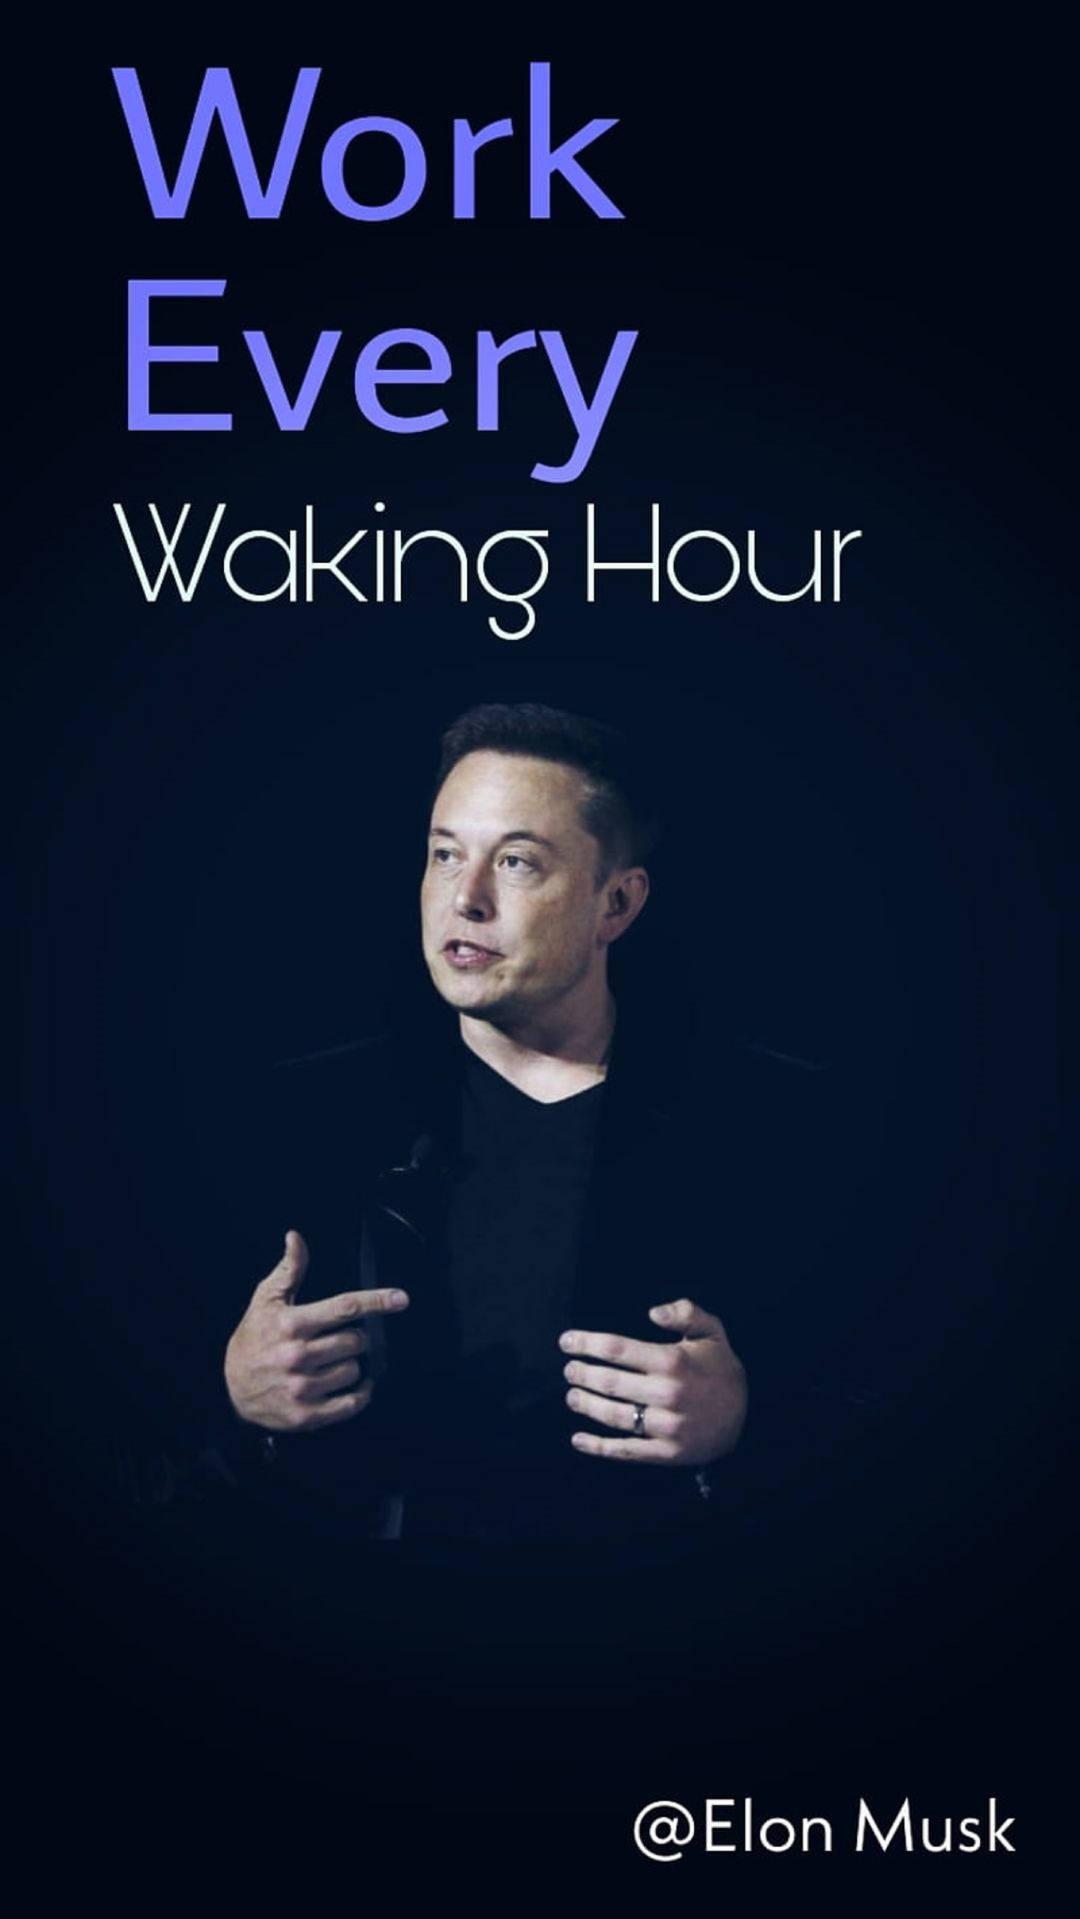 Download Elon Musk Work Every Waking Hour Wallpaper